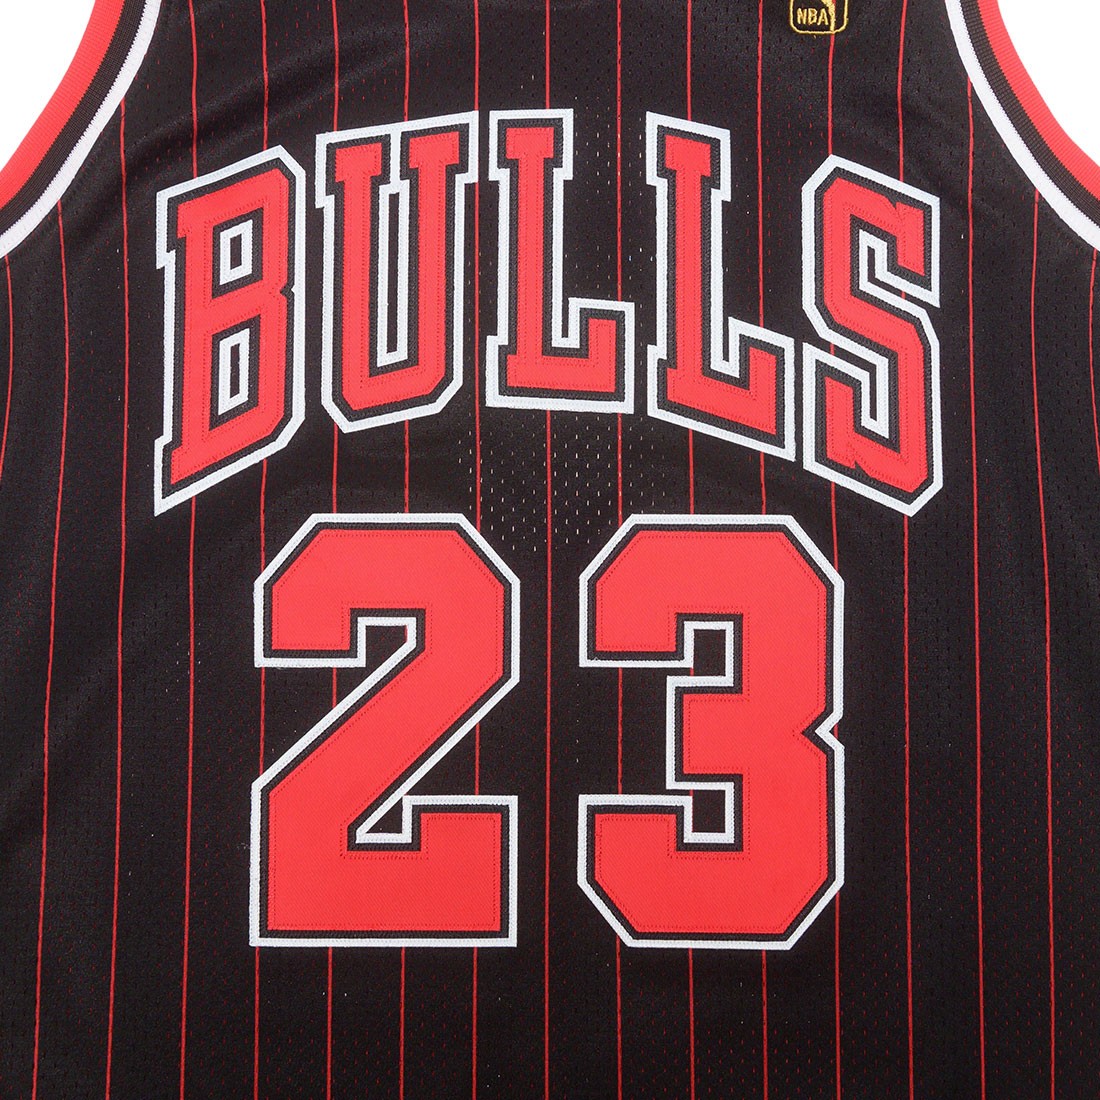 Mitchell & Ness Men's Chicago Bulls All Star Game '96 Michael